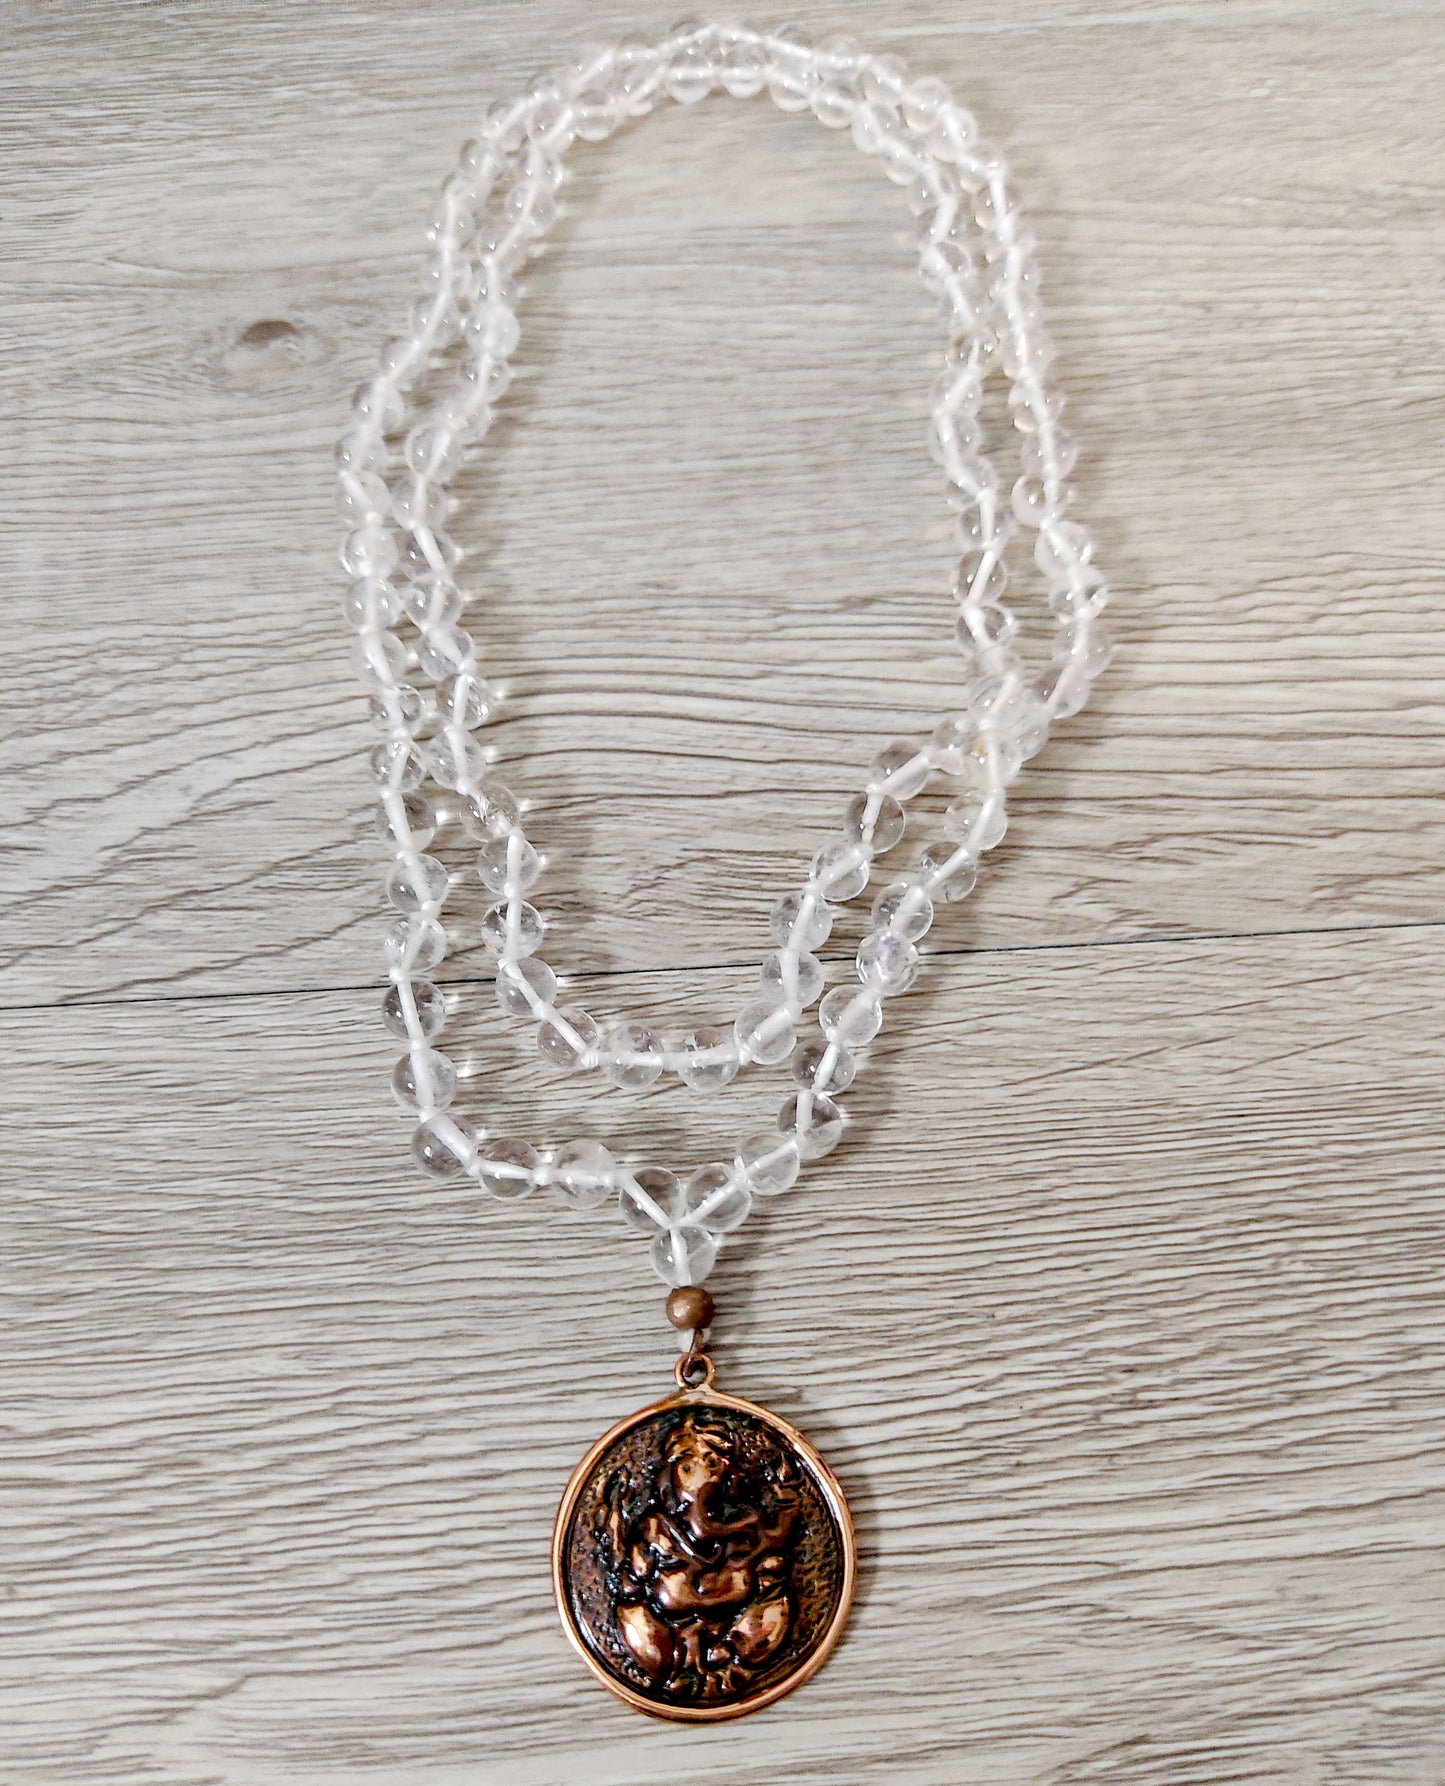 Ganesh Ji Ganapati Pure Copper Pendant with Crystal Quartz Beaded Mala Necklace